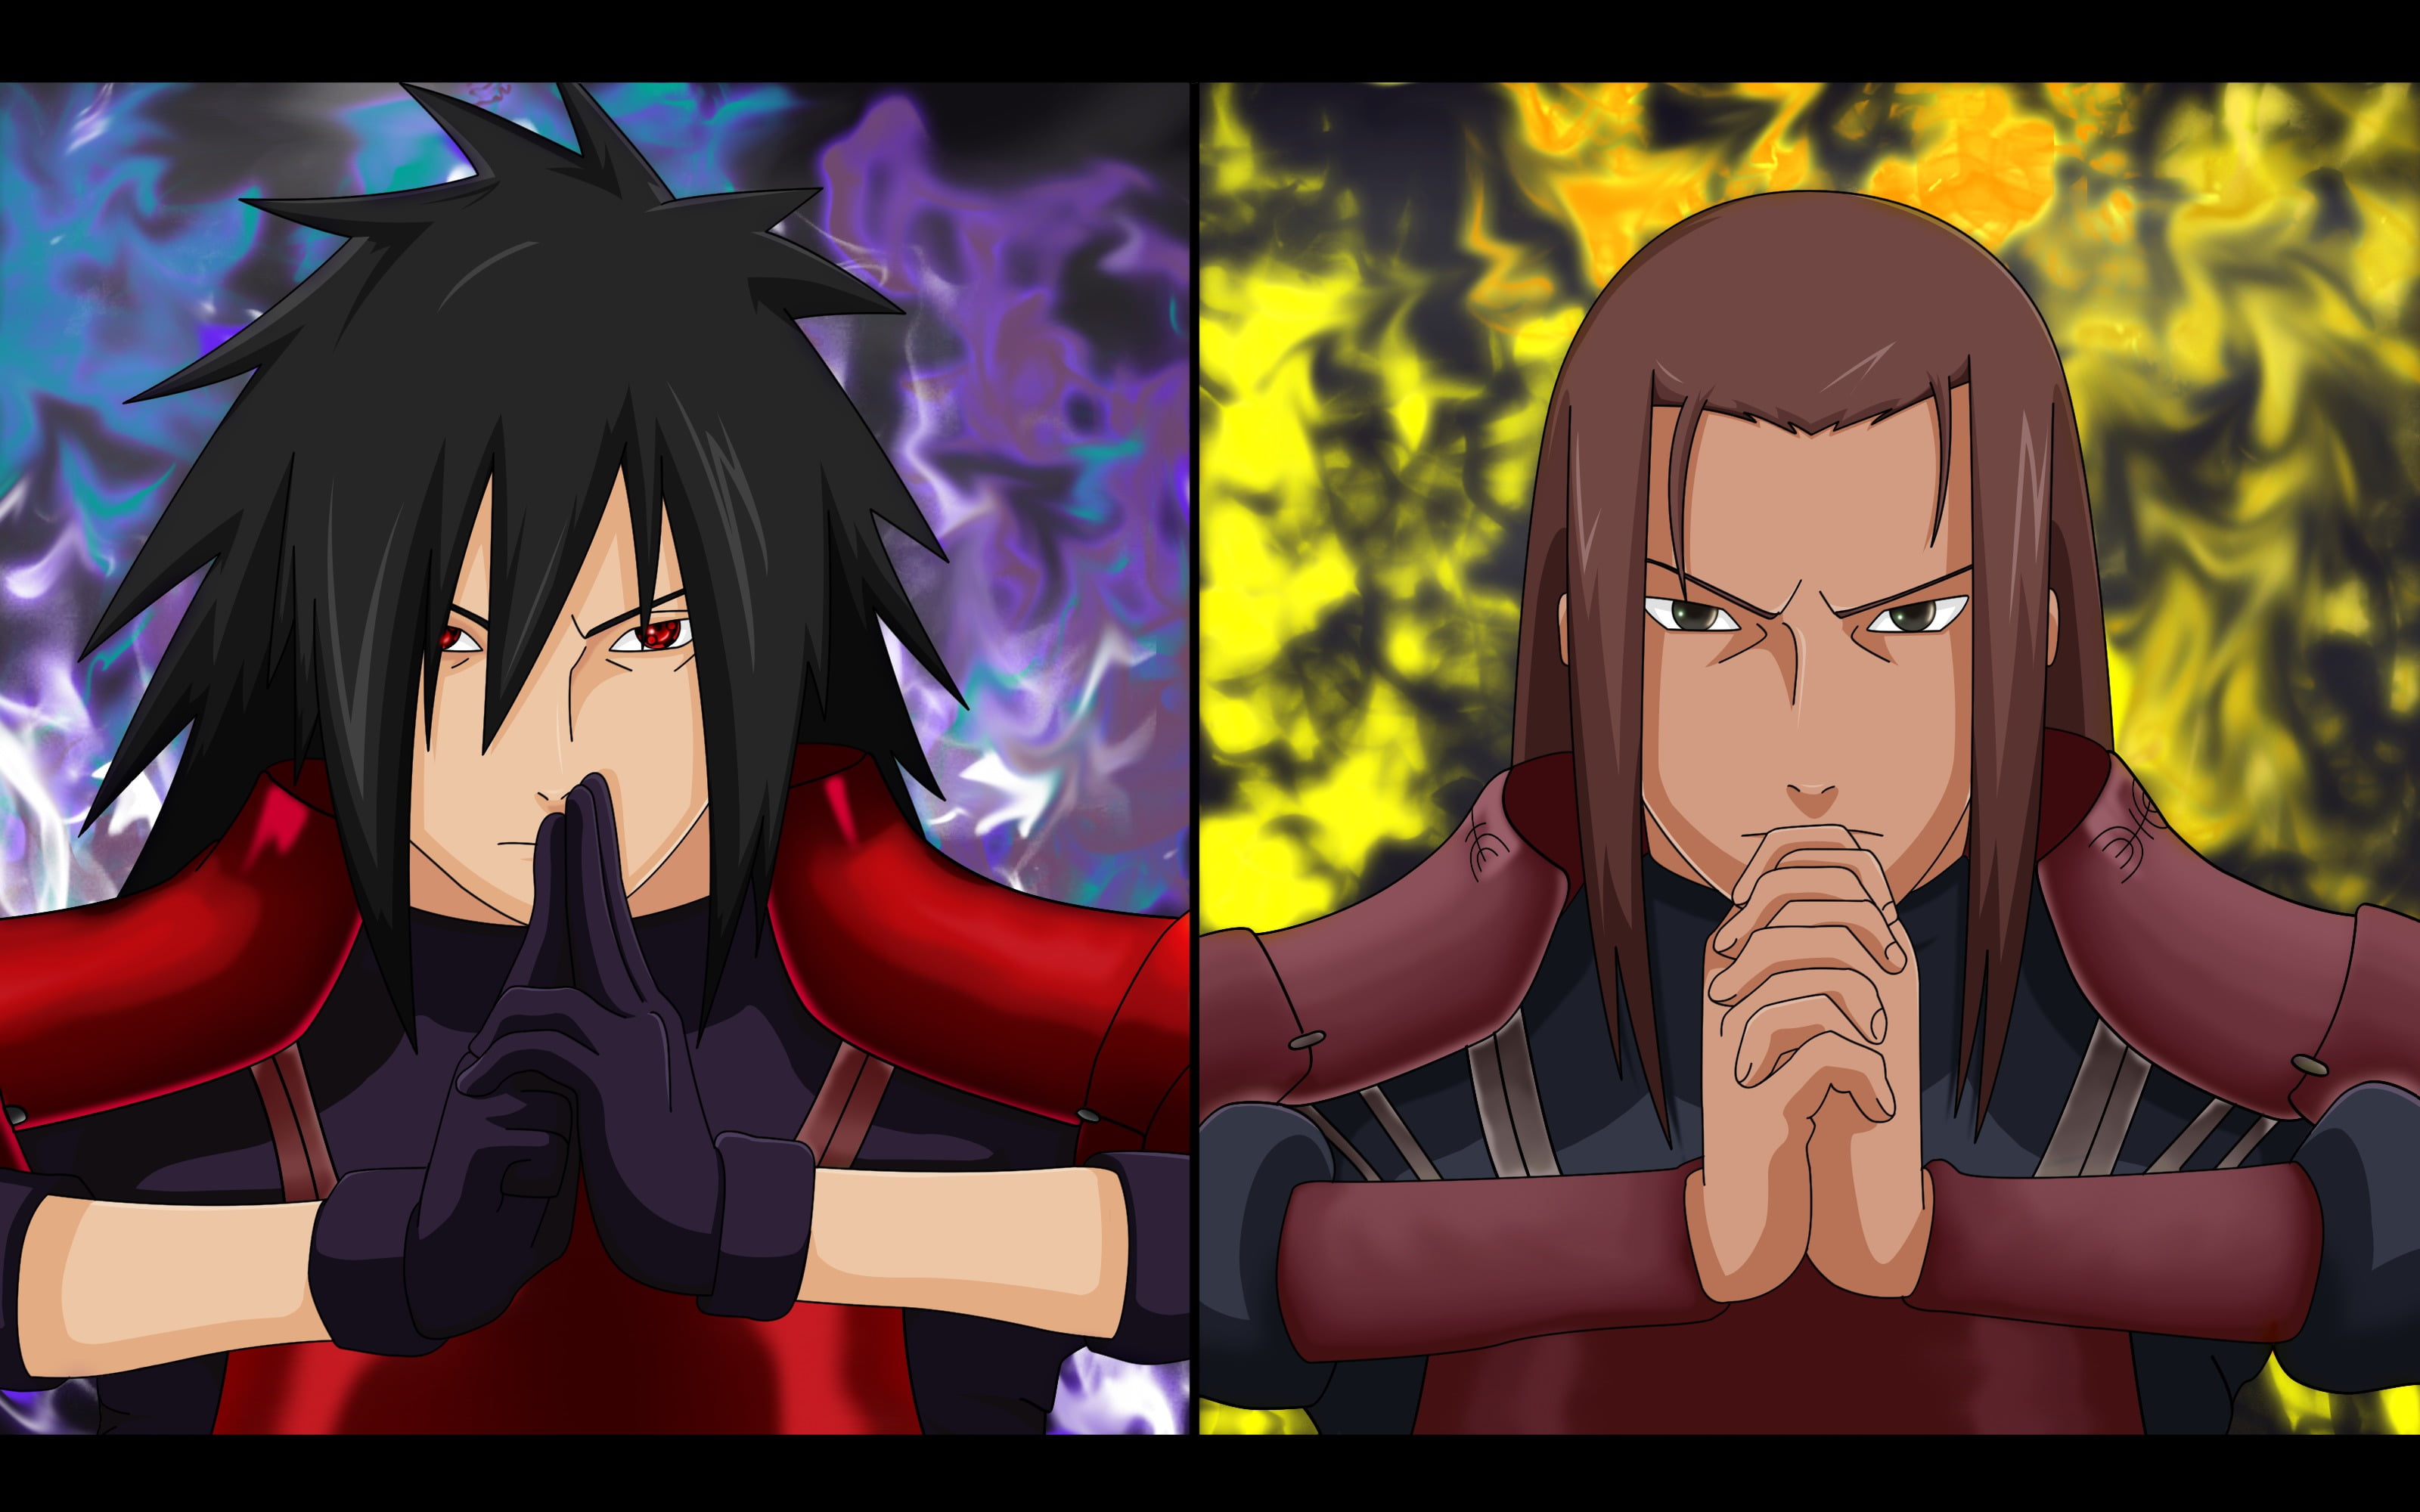 HD wallpaper: Madara and Hashirama illustration collage, Naruto Shippuuden ...